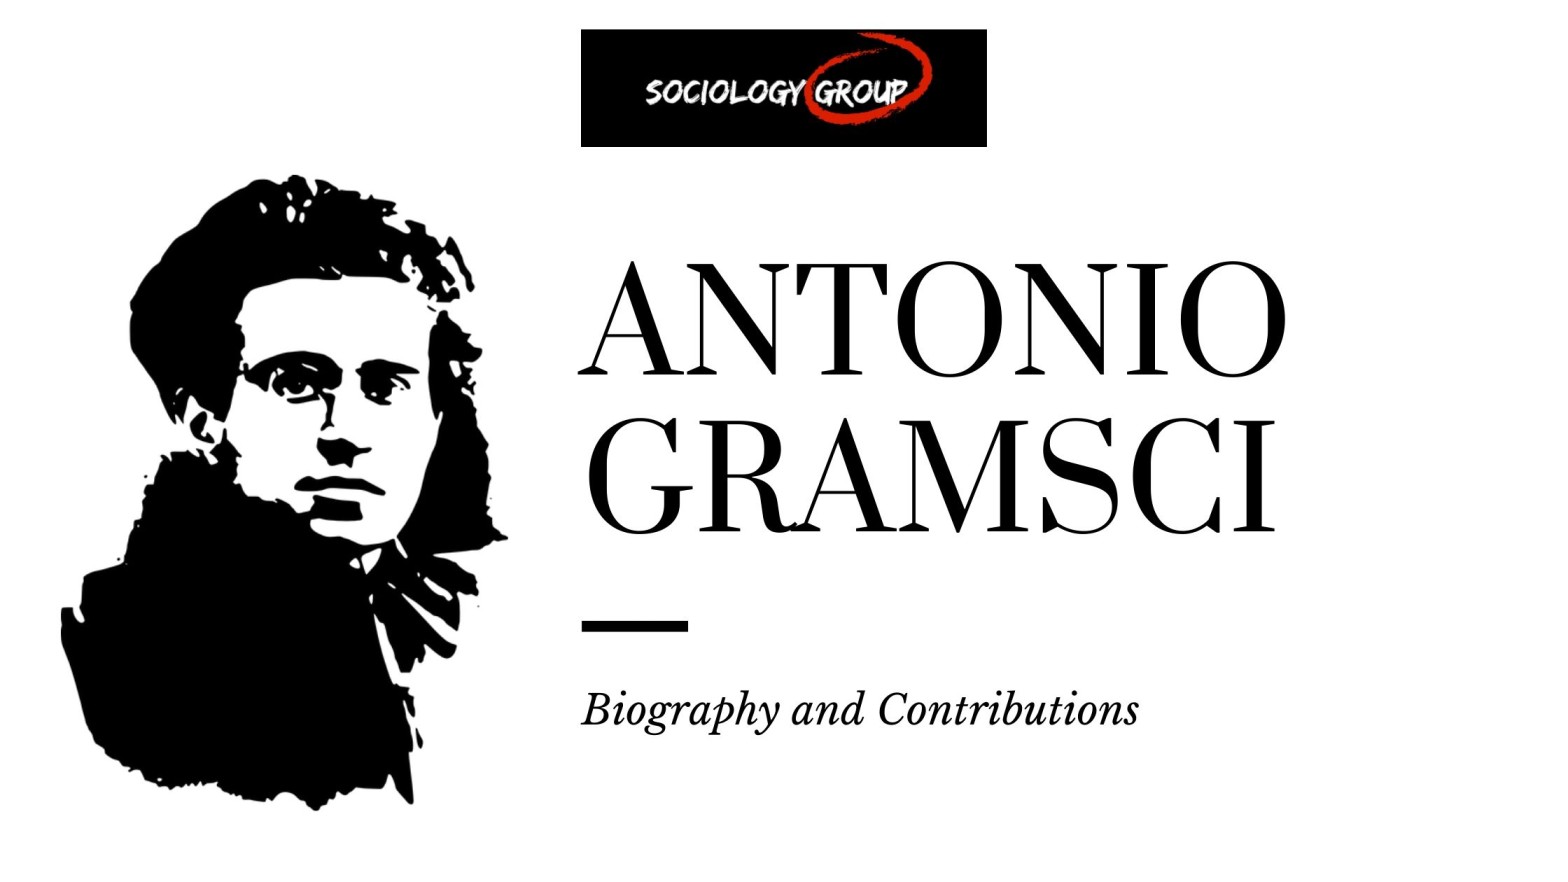 ANTONIO GRAMSCI  BIOGRAPHY AND CONTRIBUTIONS LIKE CULTURE HEGEMONY